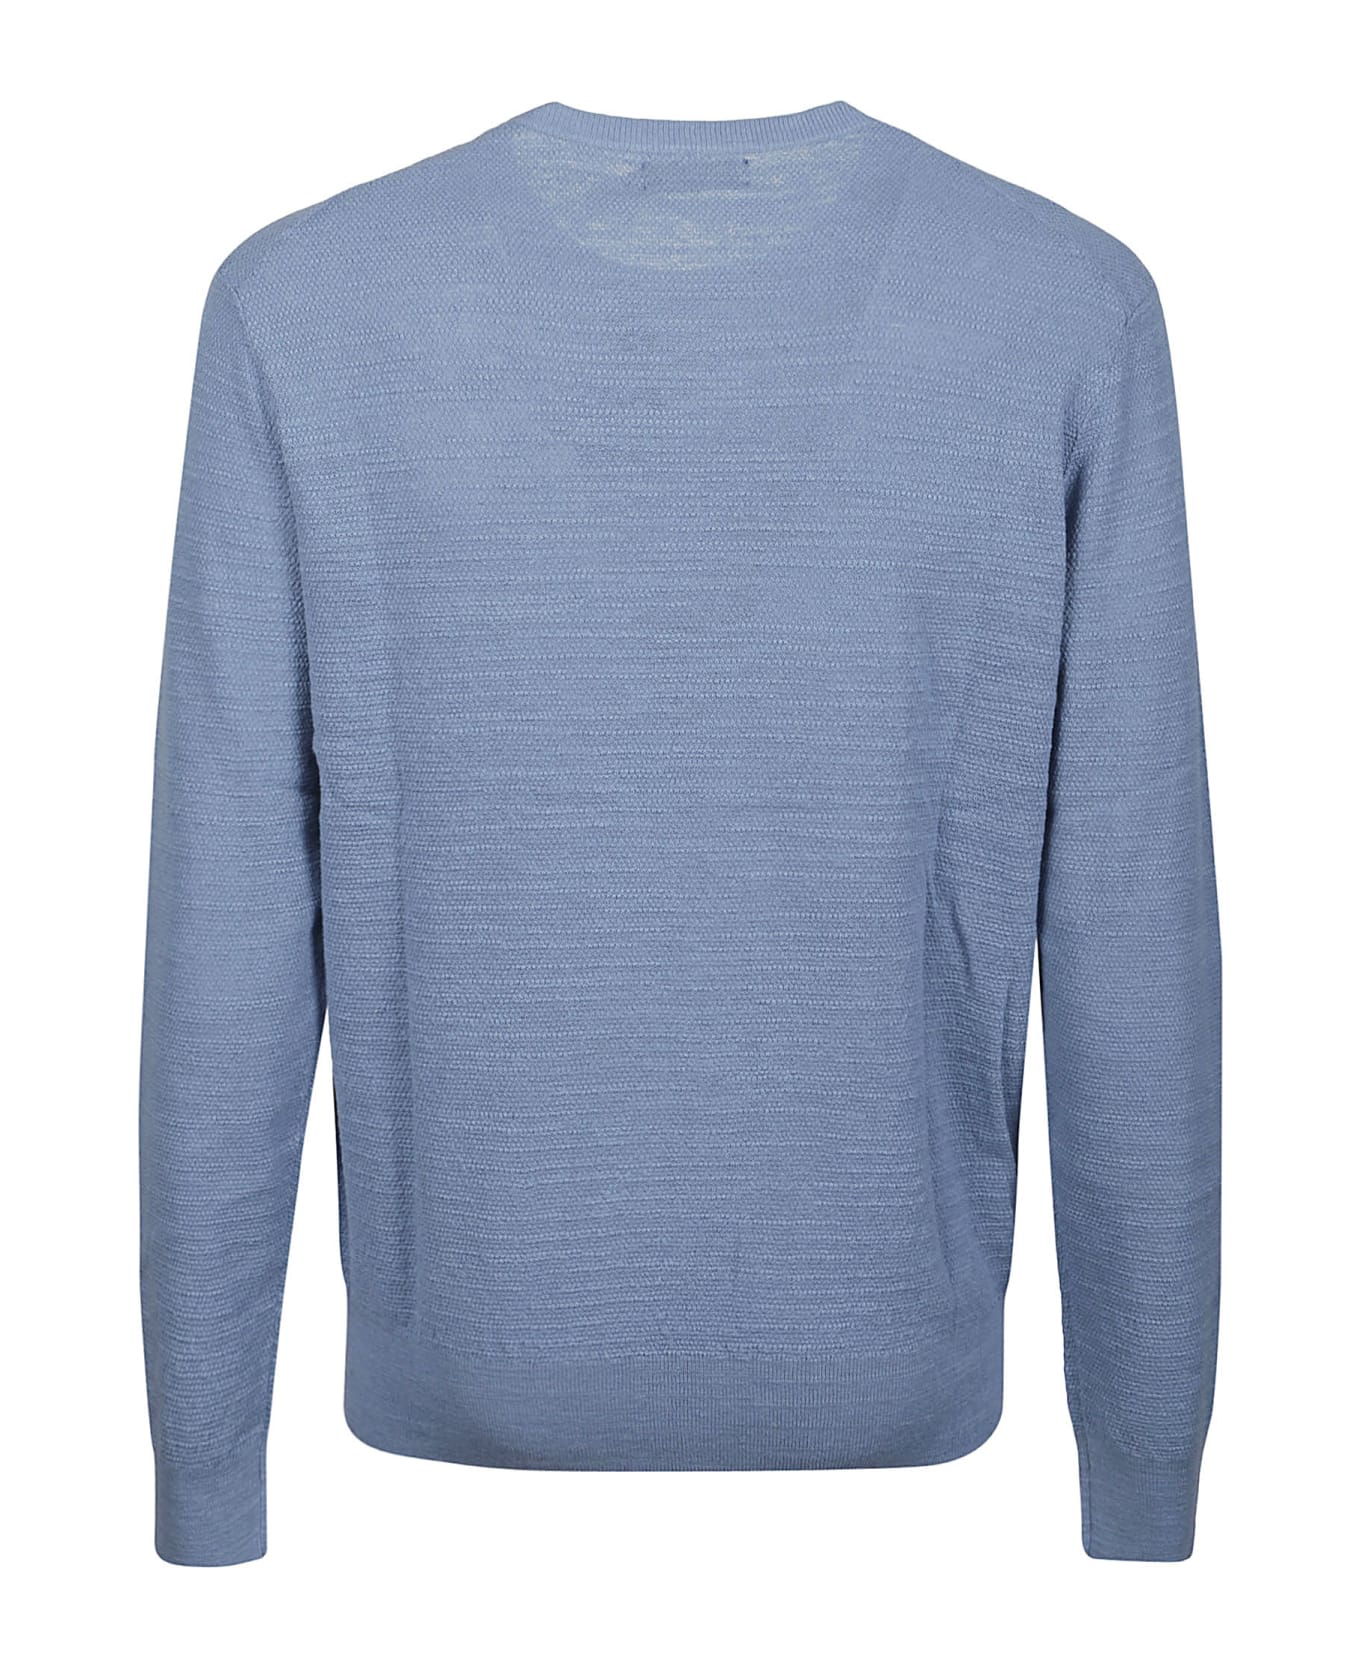 Polo Ralph Lauren Long Sleeve Sweater - Channel Blue